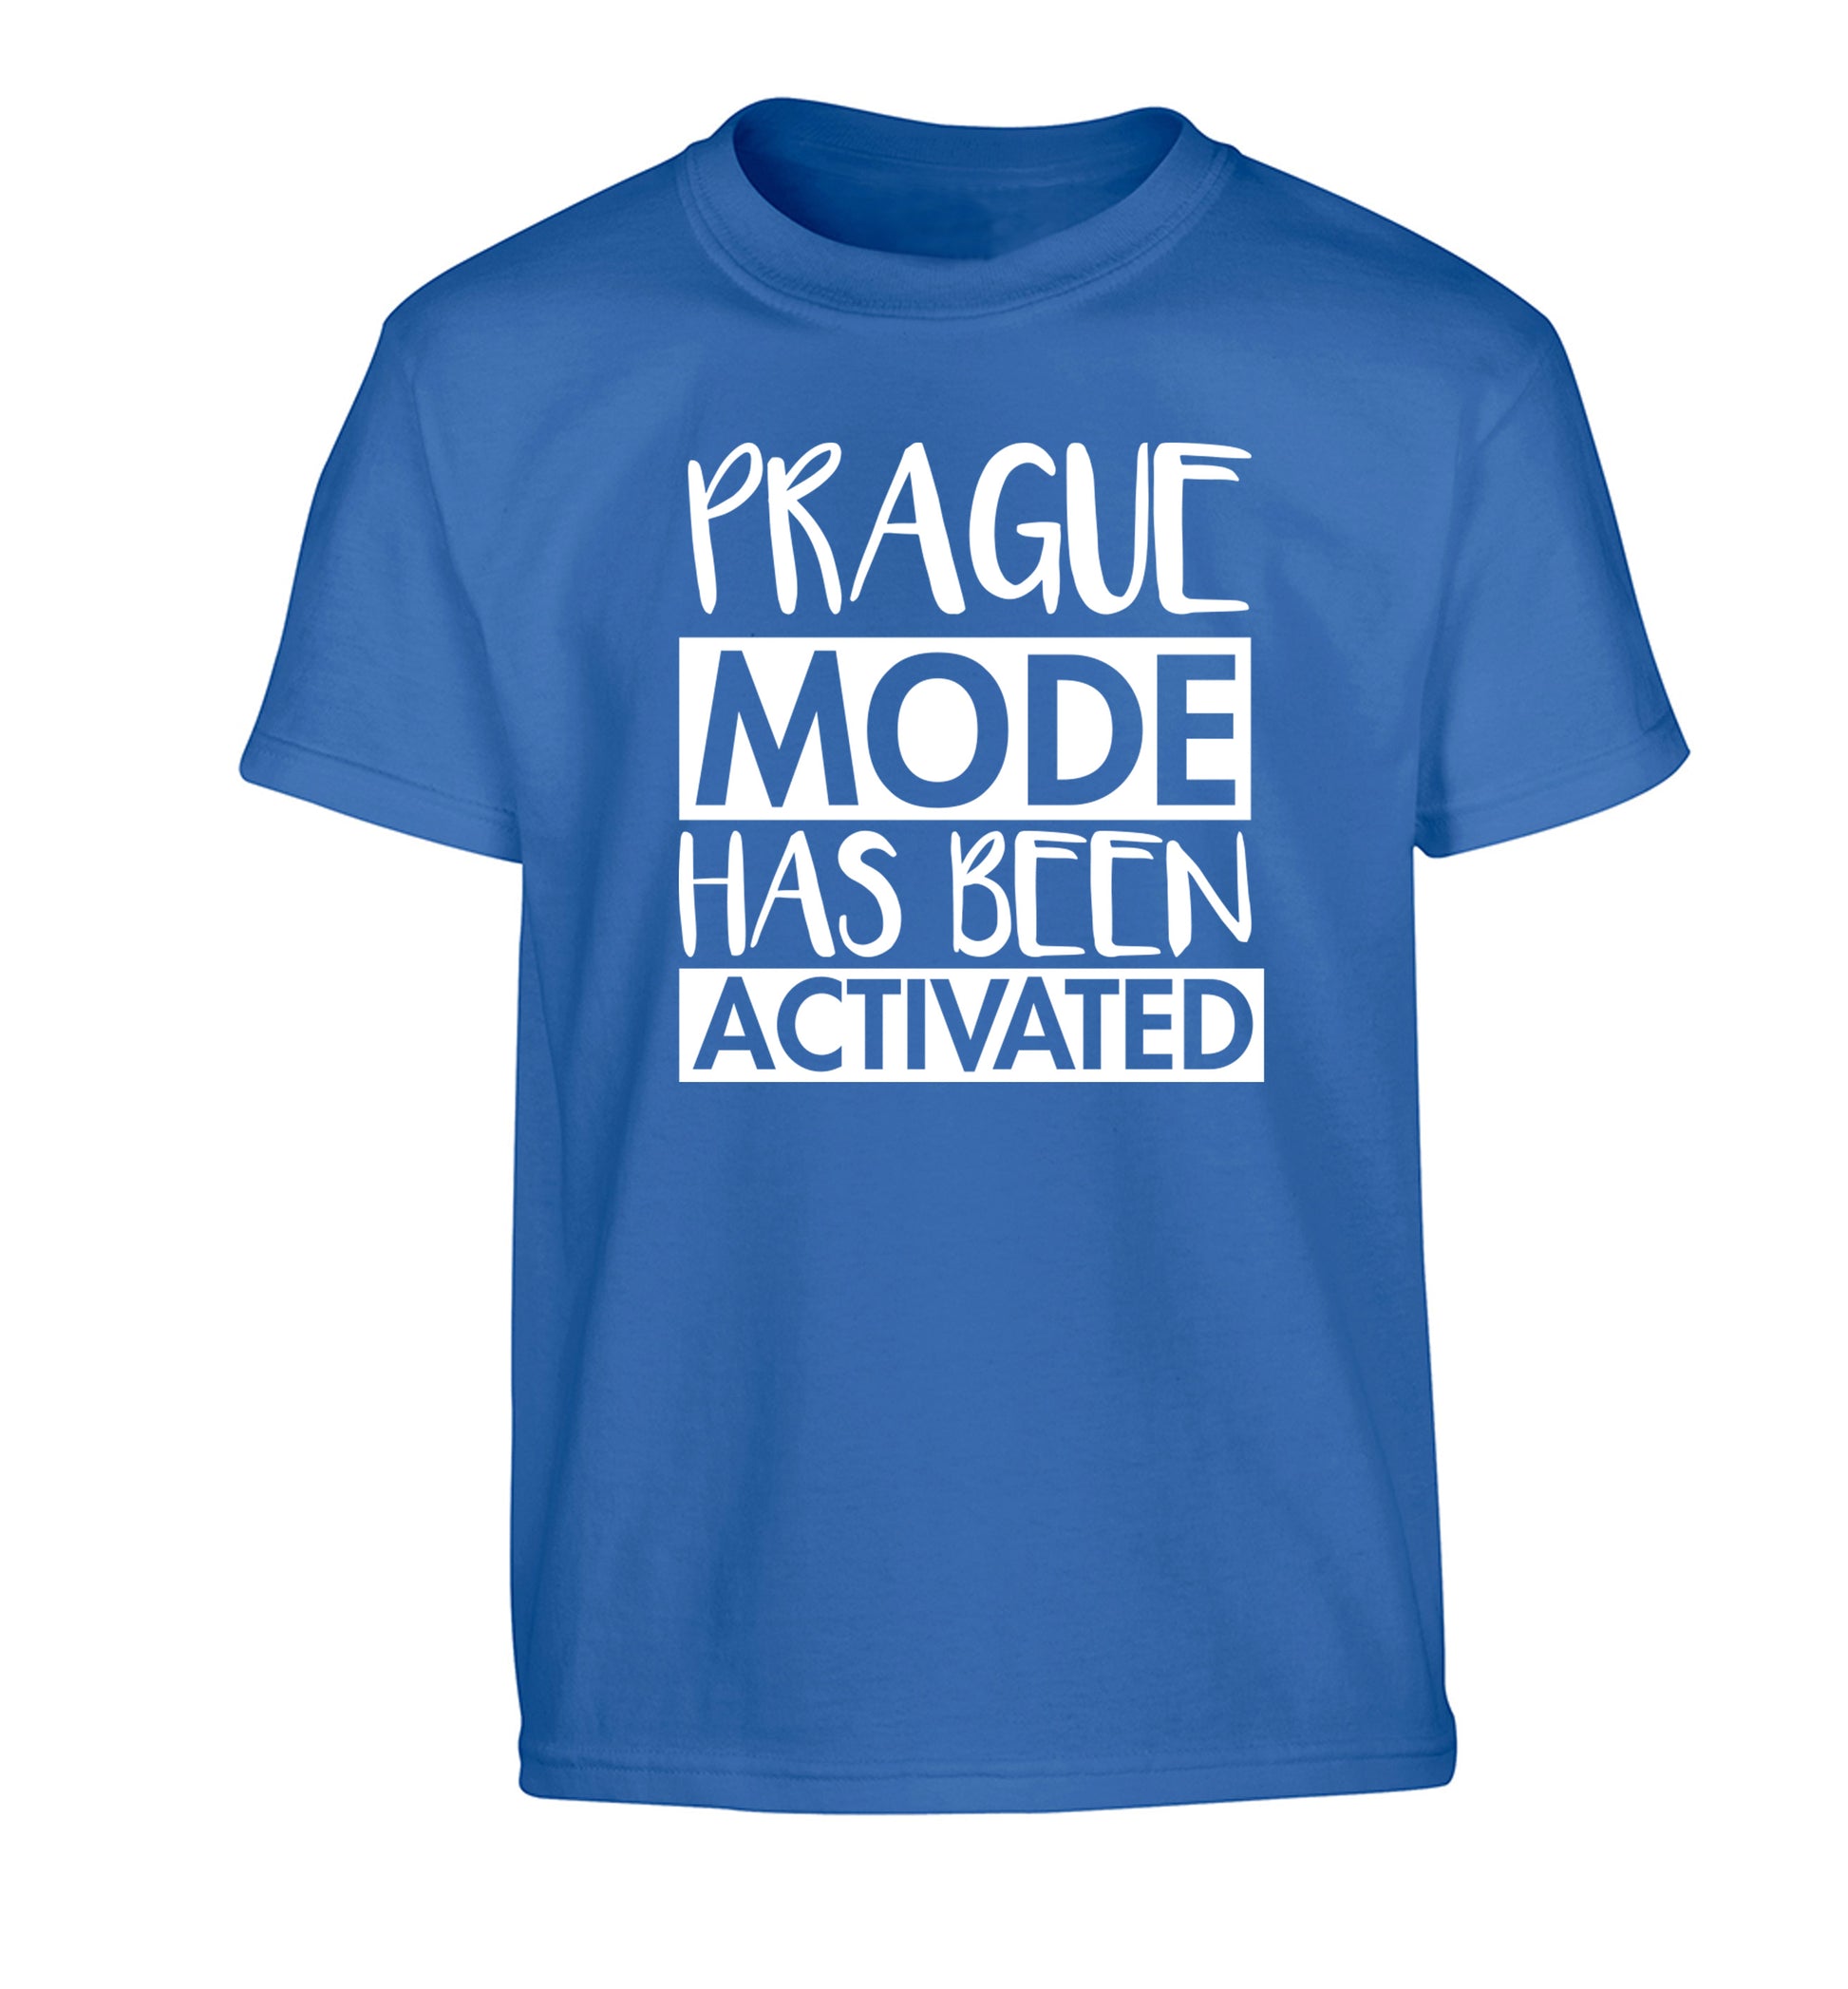 Prague mode has been activated Children's blue Tshirt 12-13 Years